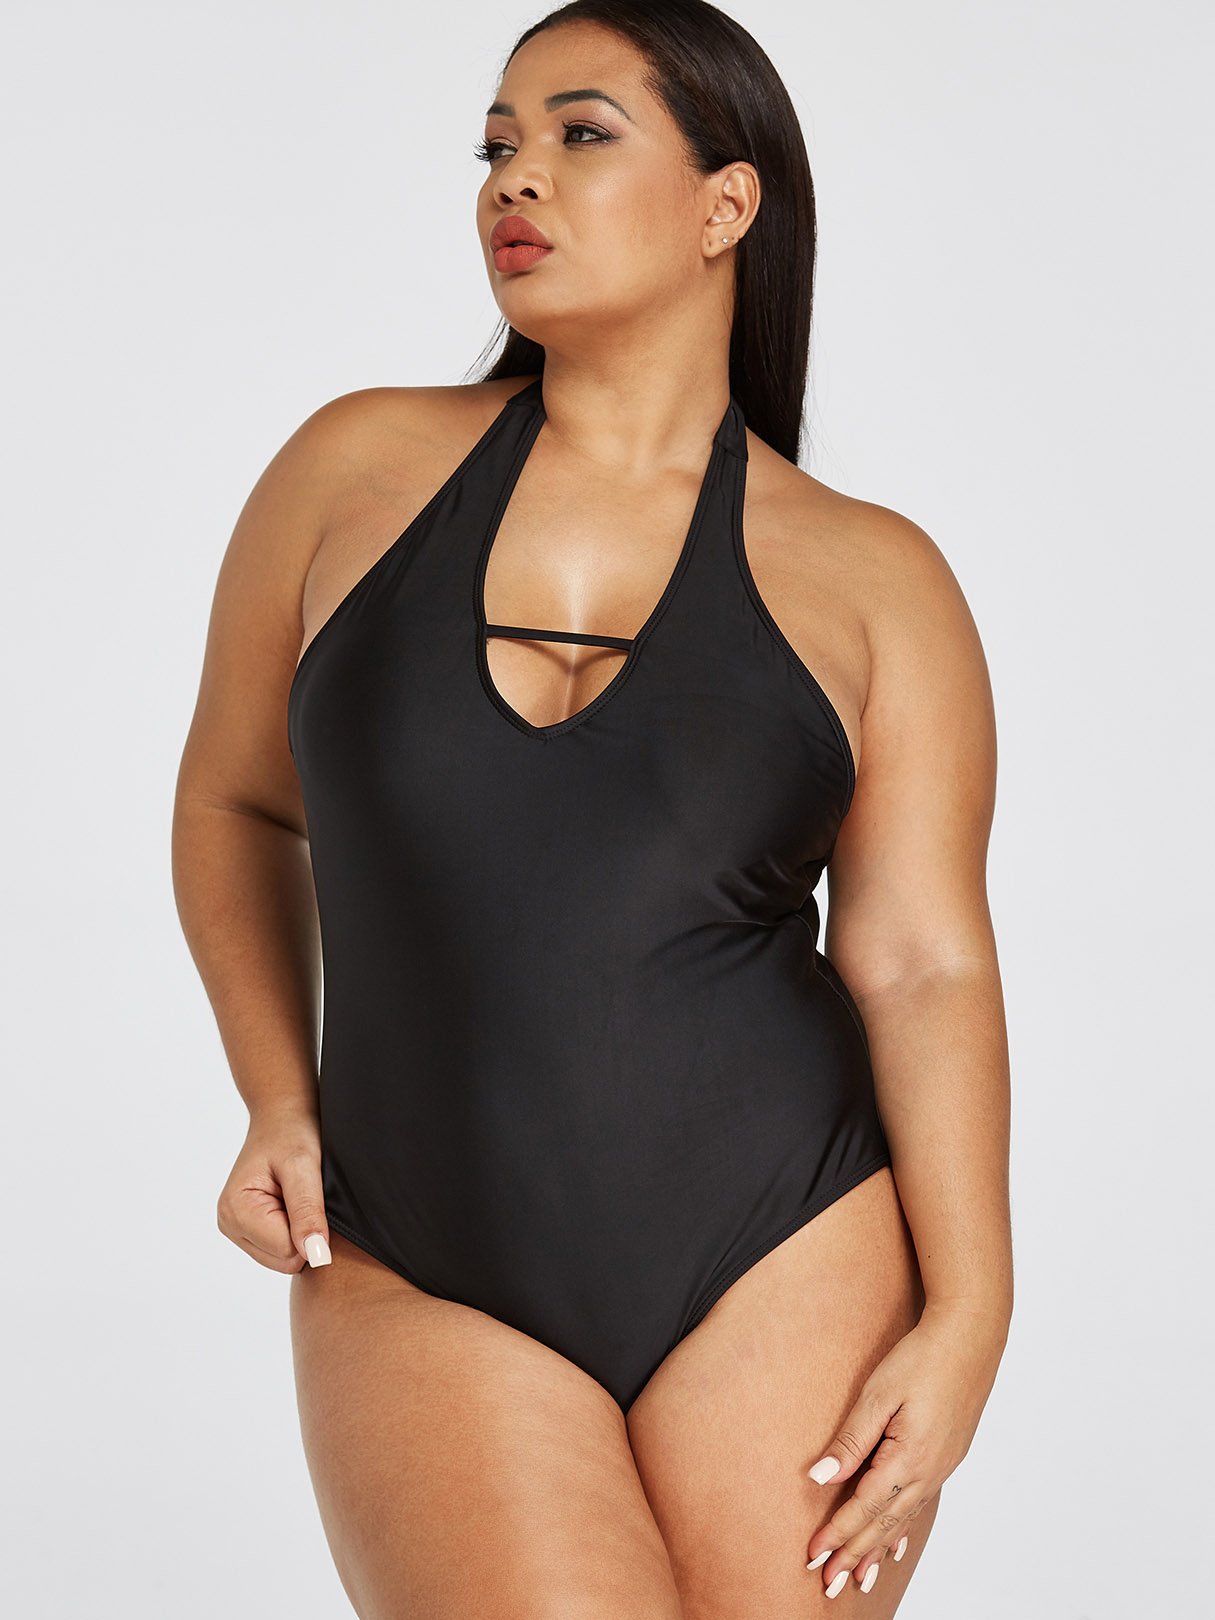 OEM Ladies Black Plus Size Swimwear